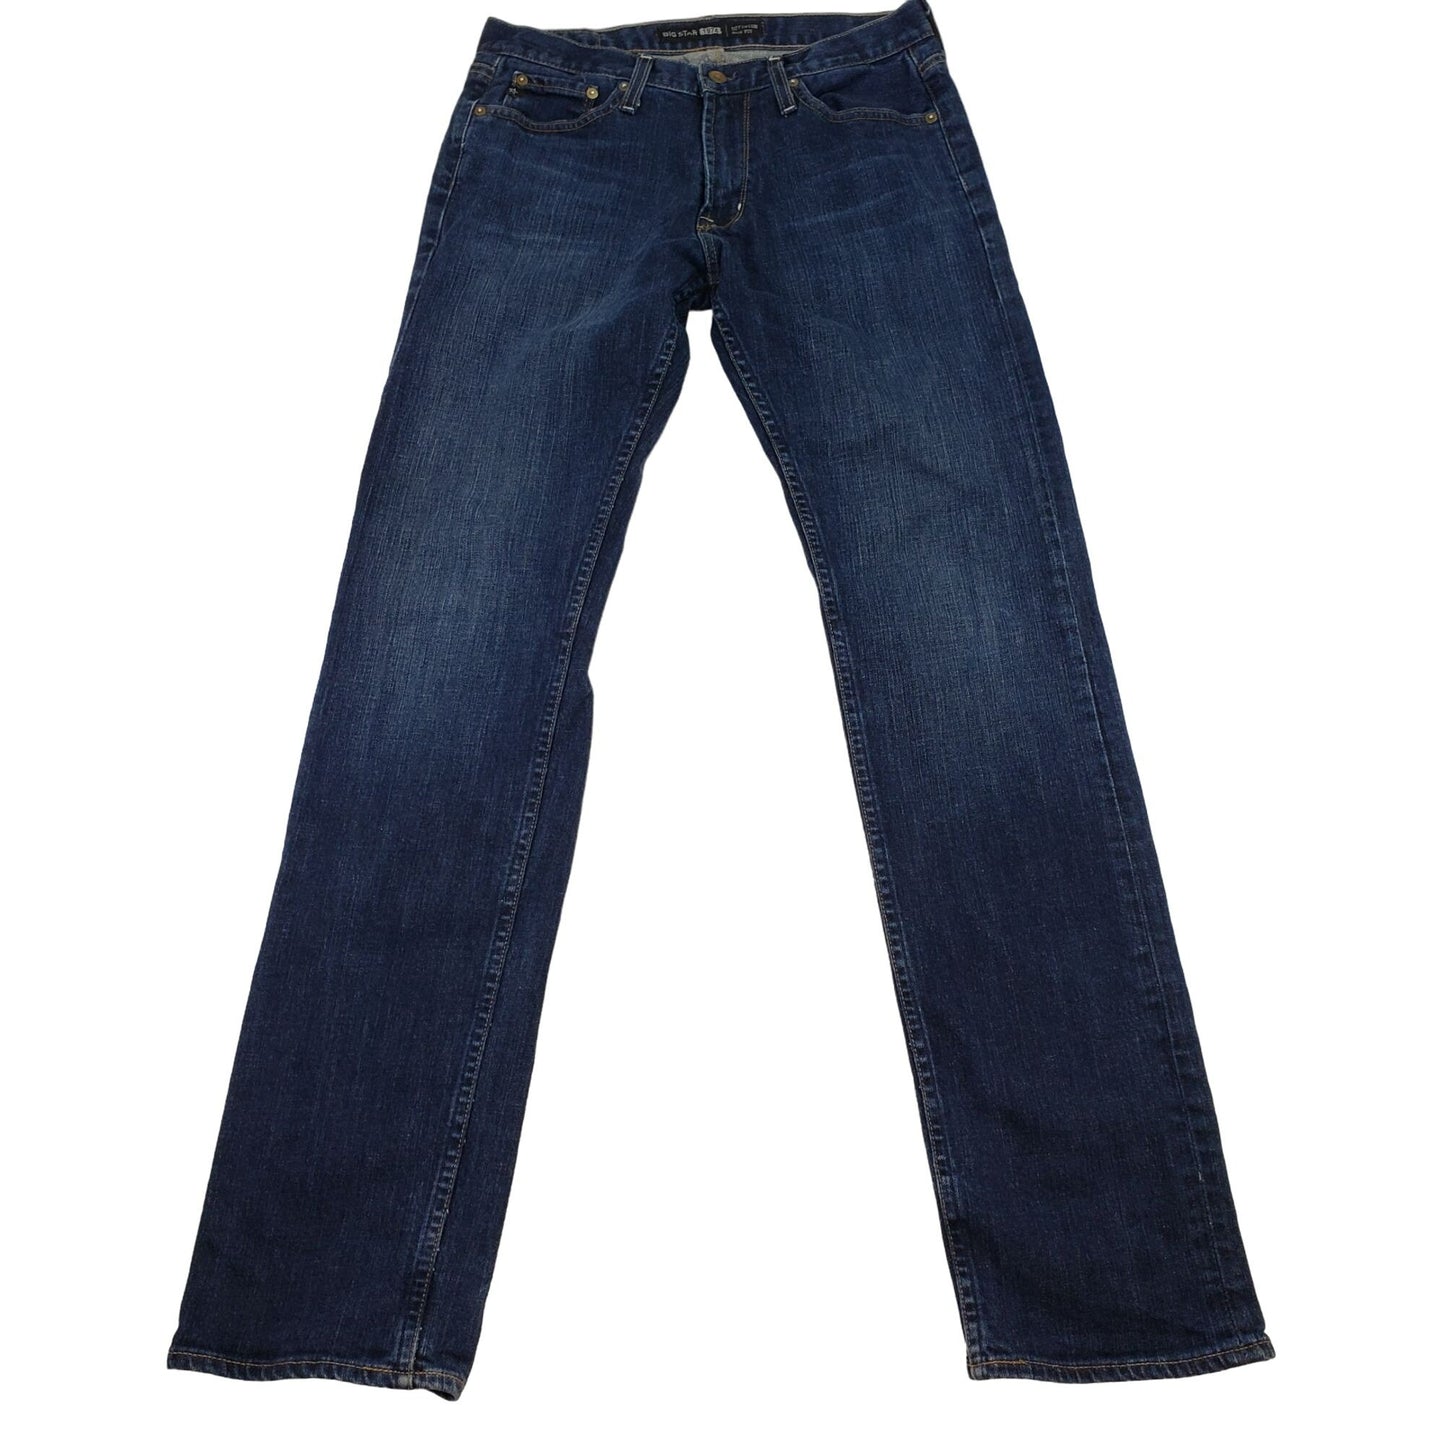 Big Star Division Slim Fit Jeans Size 31 Long